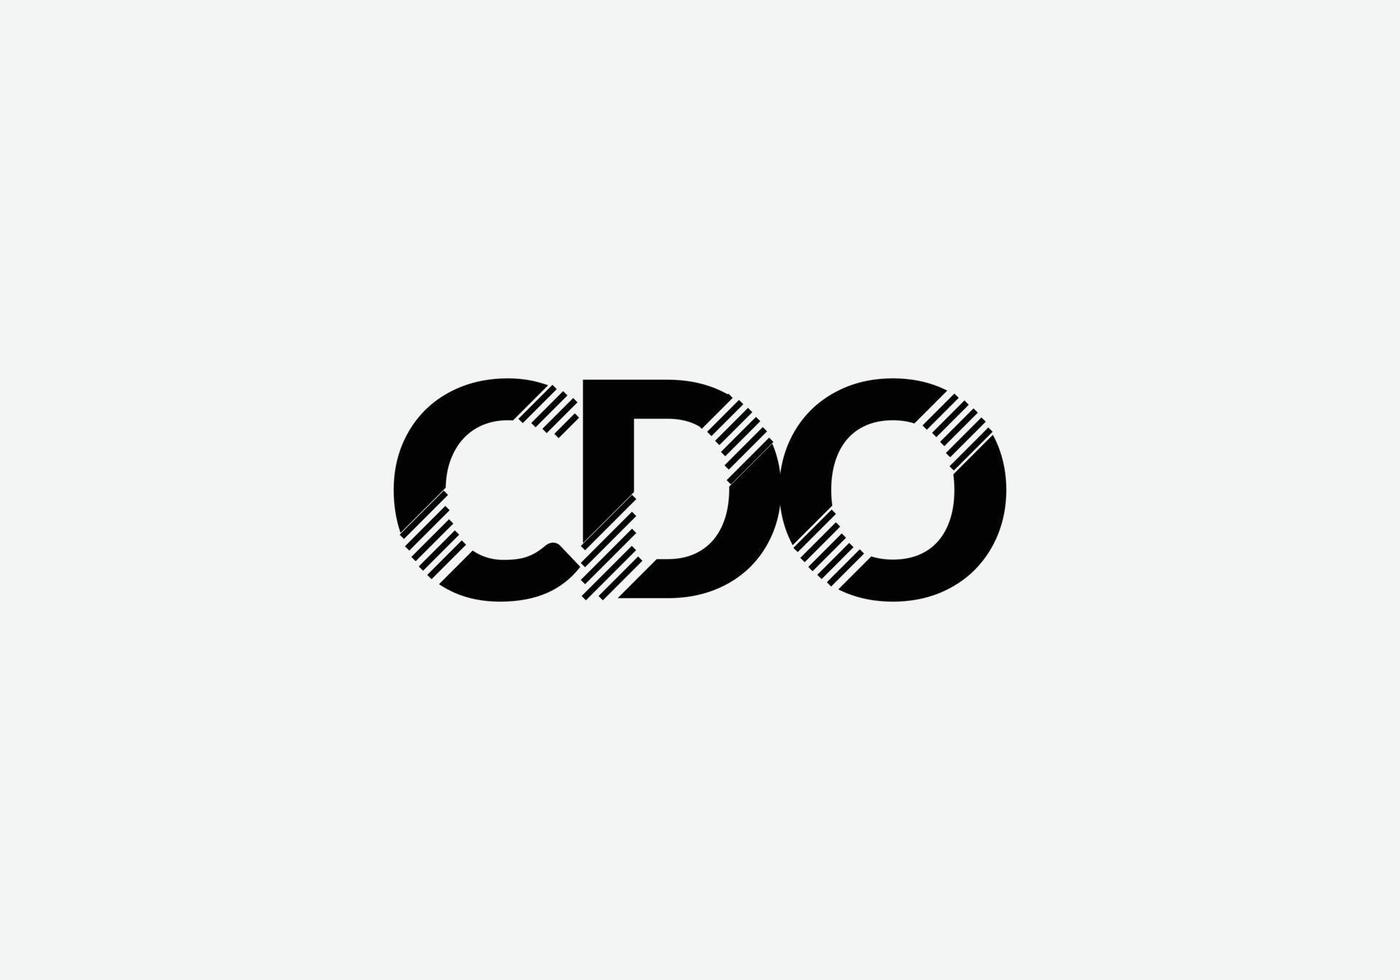 Abstract c d o letter marks minimalist logo design vector